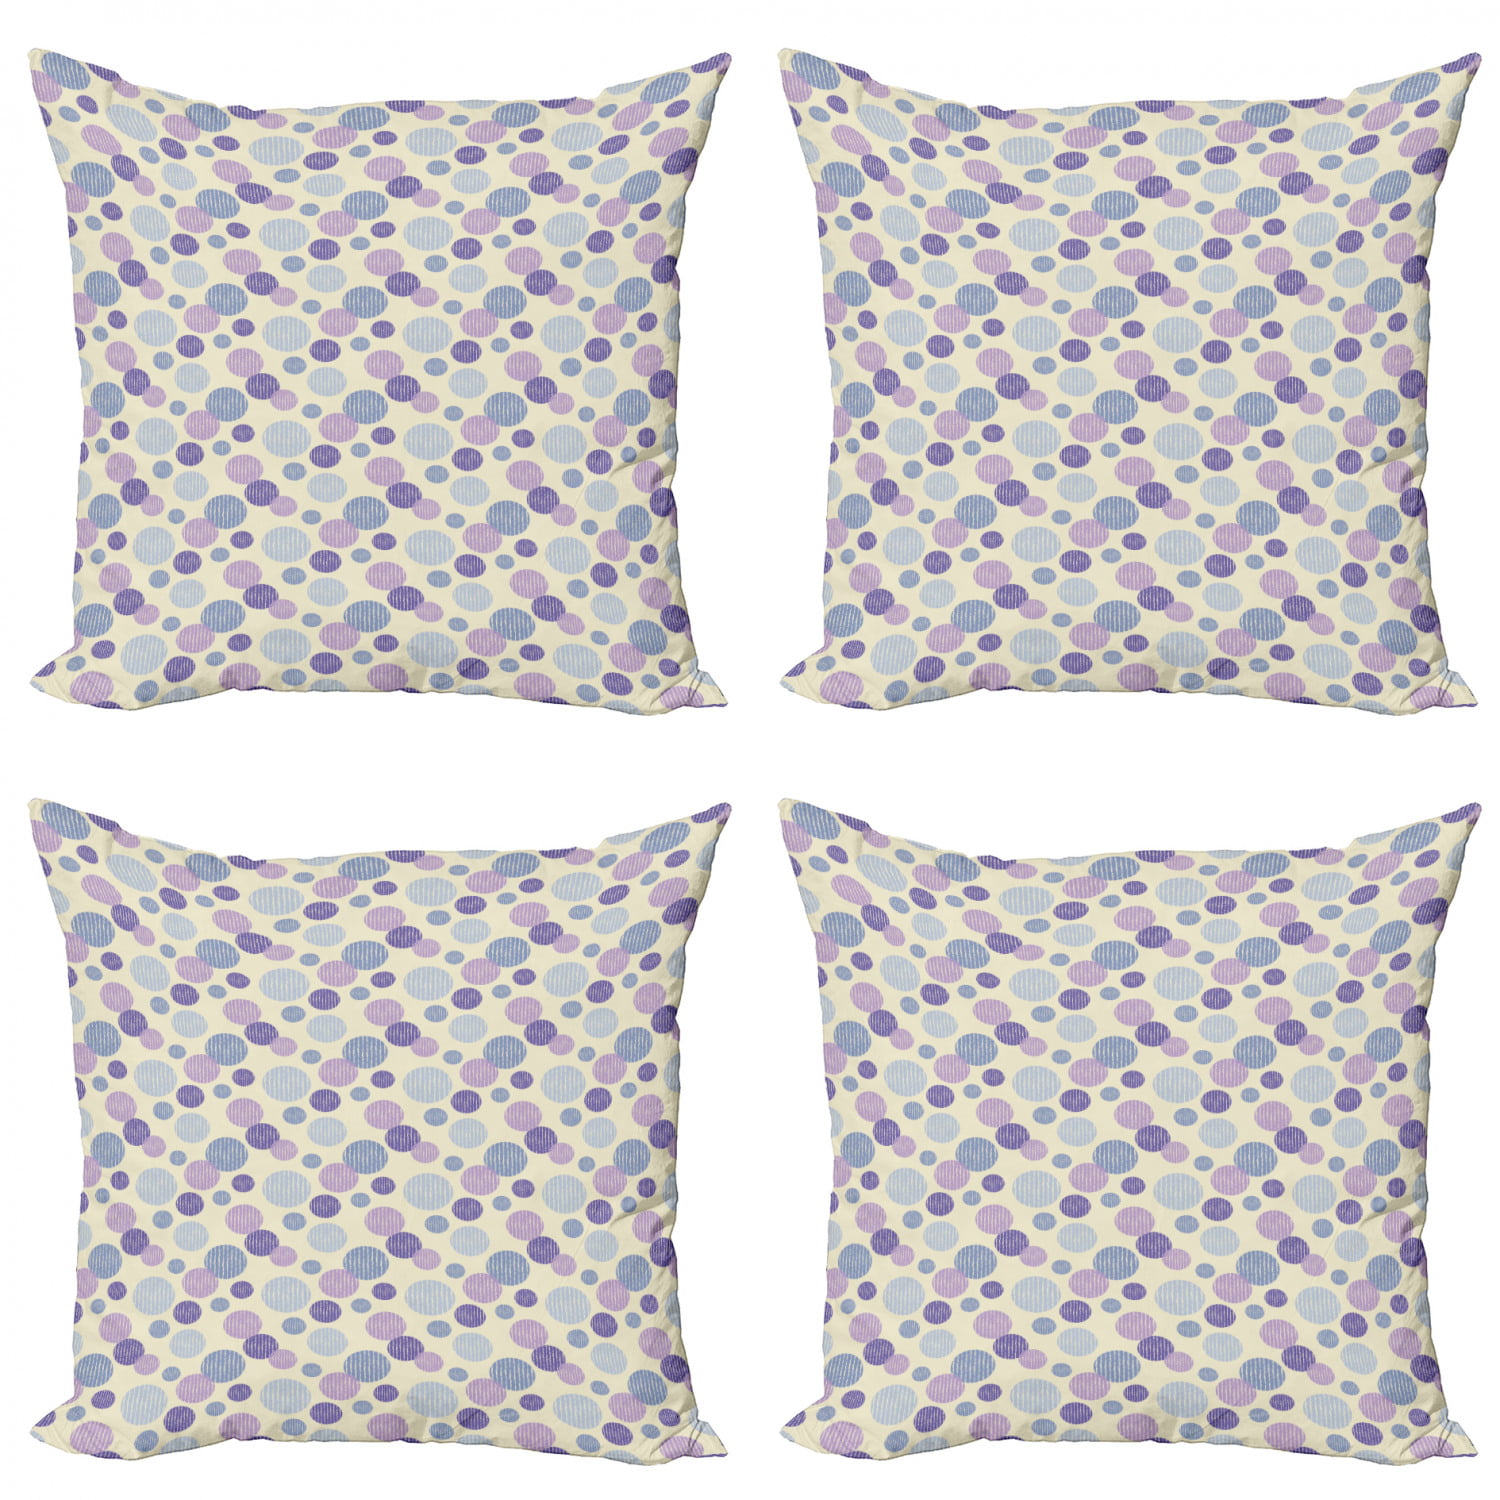 Multicolor Polka Dot Gift Ideas Vertical Black Turqouise Stripes Pattern Throw Pillow 16x16